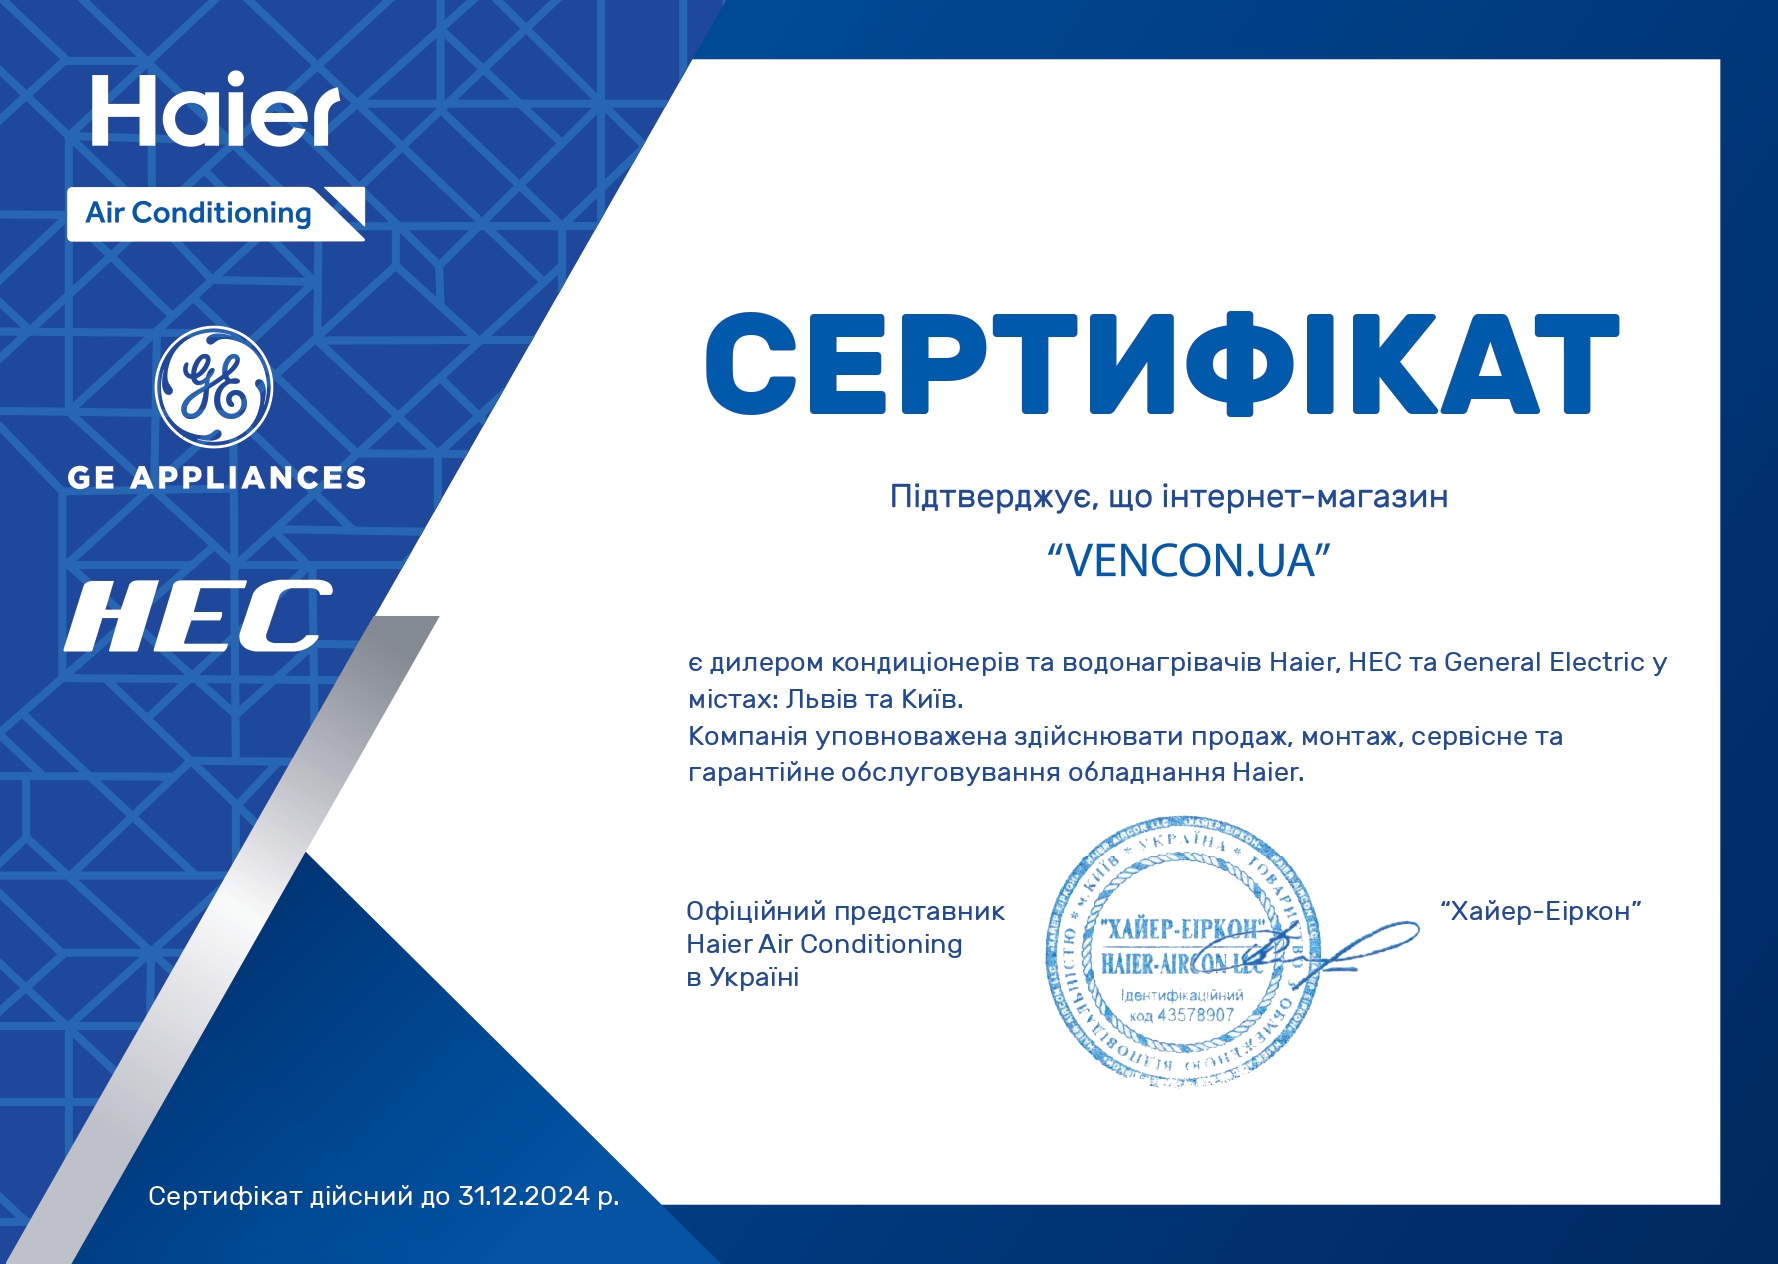 Холодильники Haier - сертификат официального продавца Haier